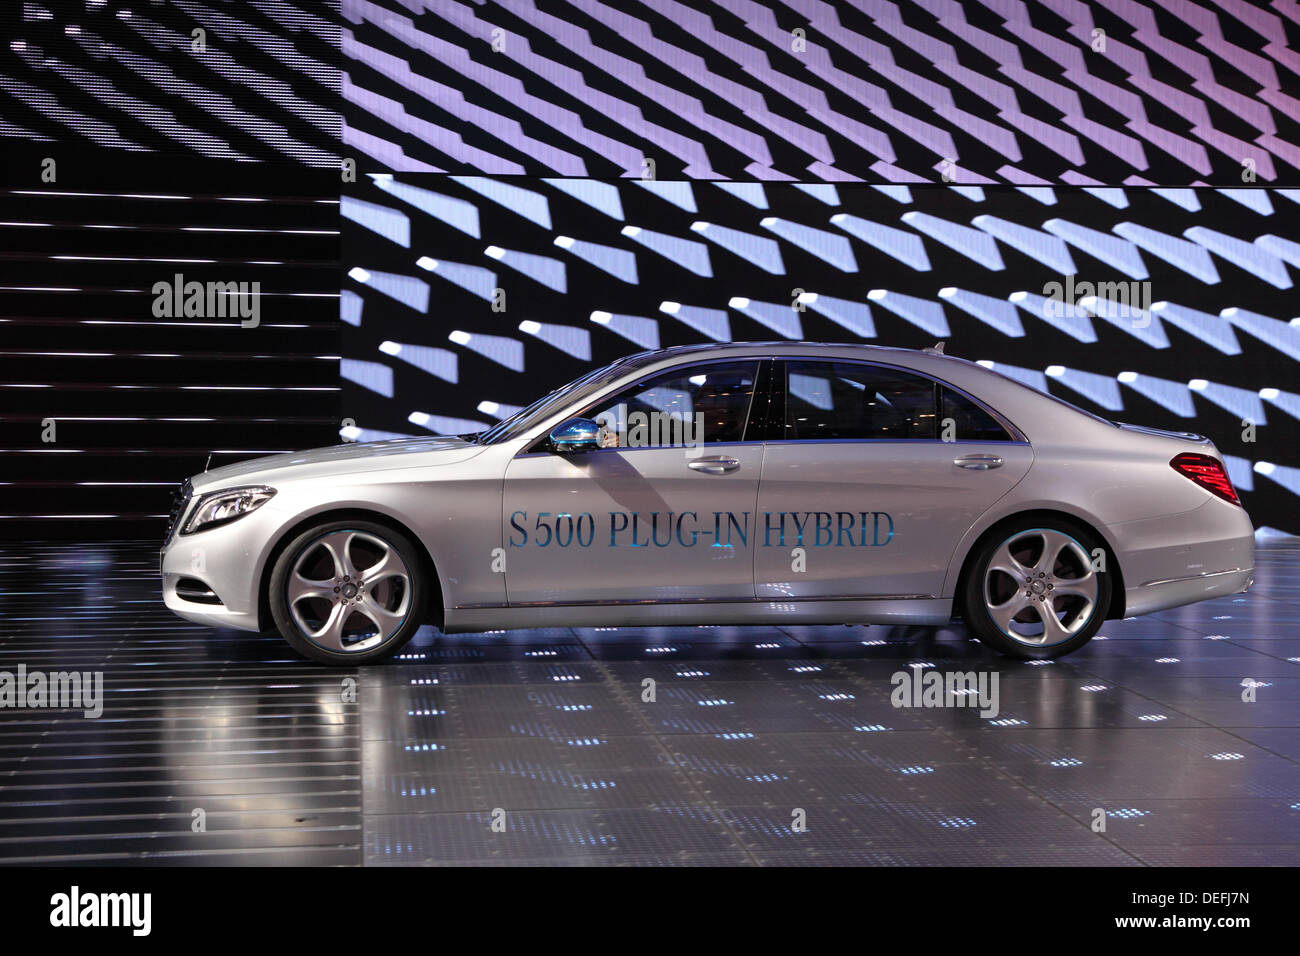 Francfort, Allemagne. 17 août, 2013. International Motor Show de Francfort, en Allemagne. Mercedes Benz S500 hybride plug-in à la 65ème IAA de Francfort, Allemagne, le 17 septembre 2013 © philipus/Alamy Live News Banque D'Images